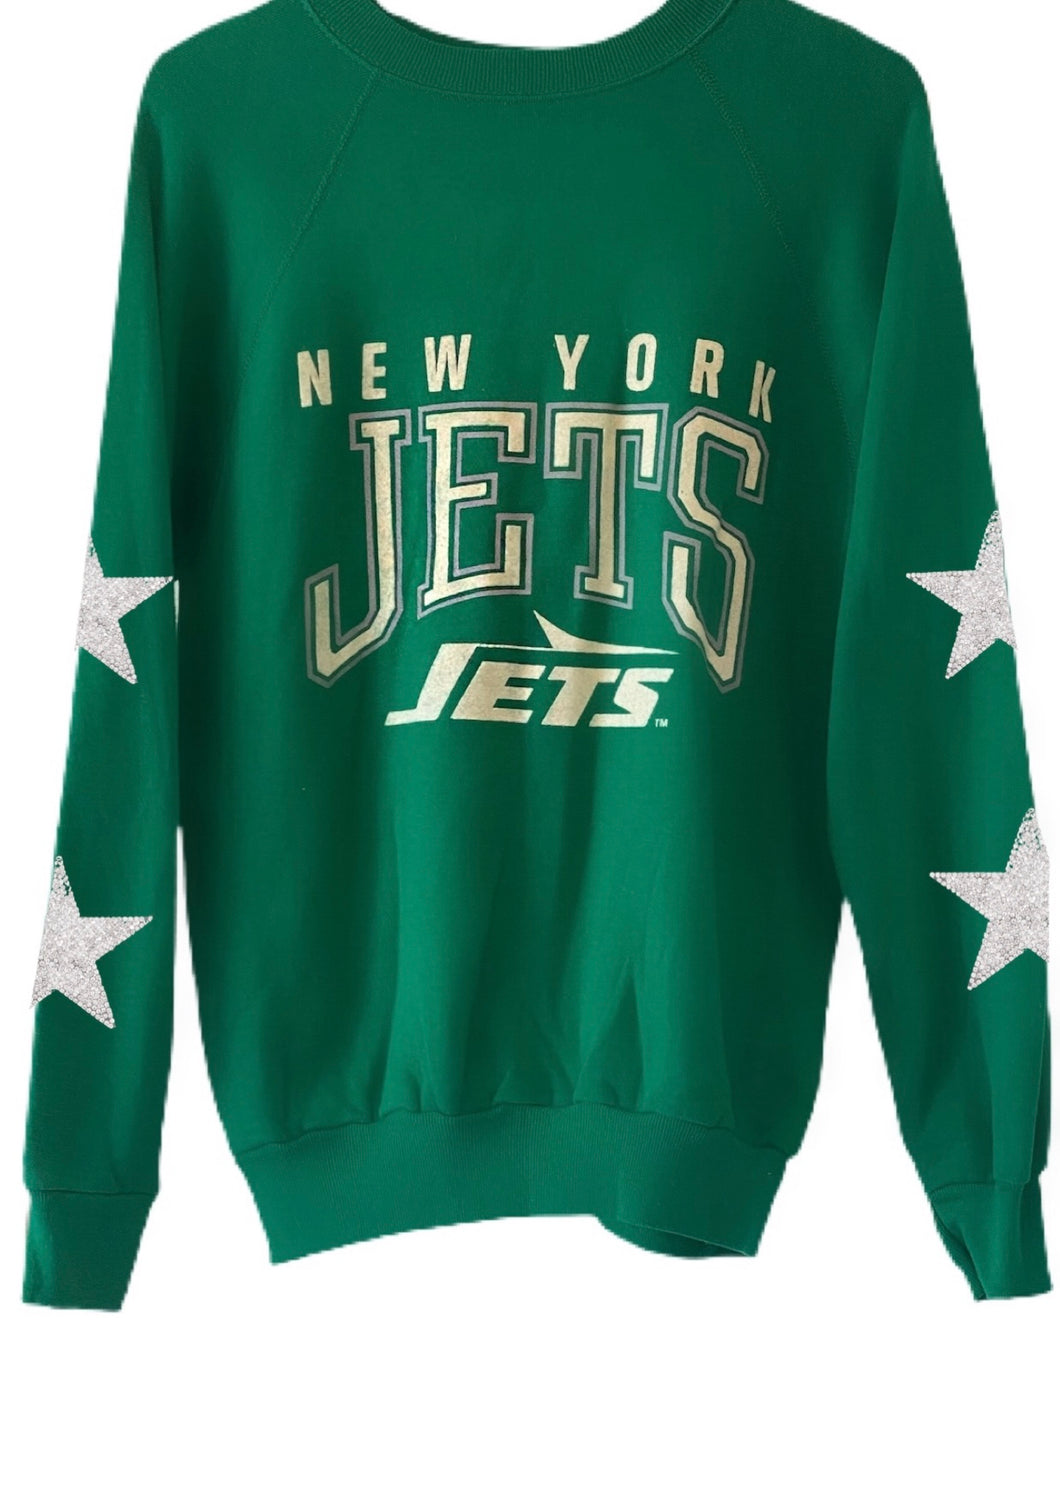 NY Jets, NFL One of a KIND Vintage Sweatshirt with Crystal Star Design